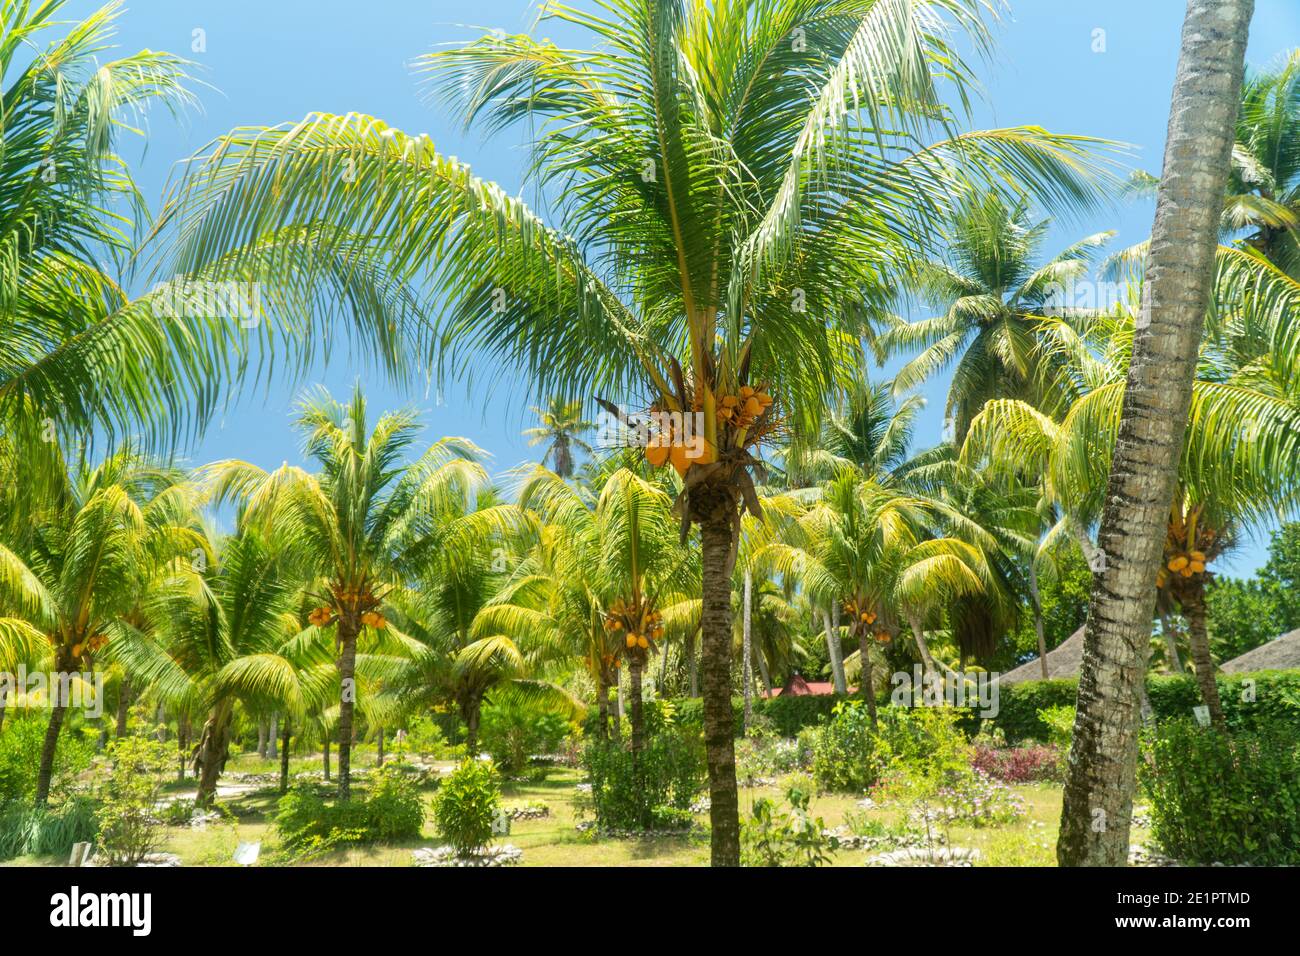 coconut palm or coconut tree (Cocos nucifera) Stock Photo